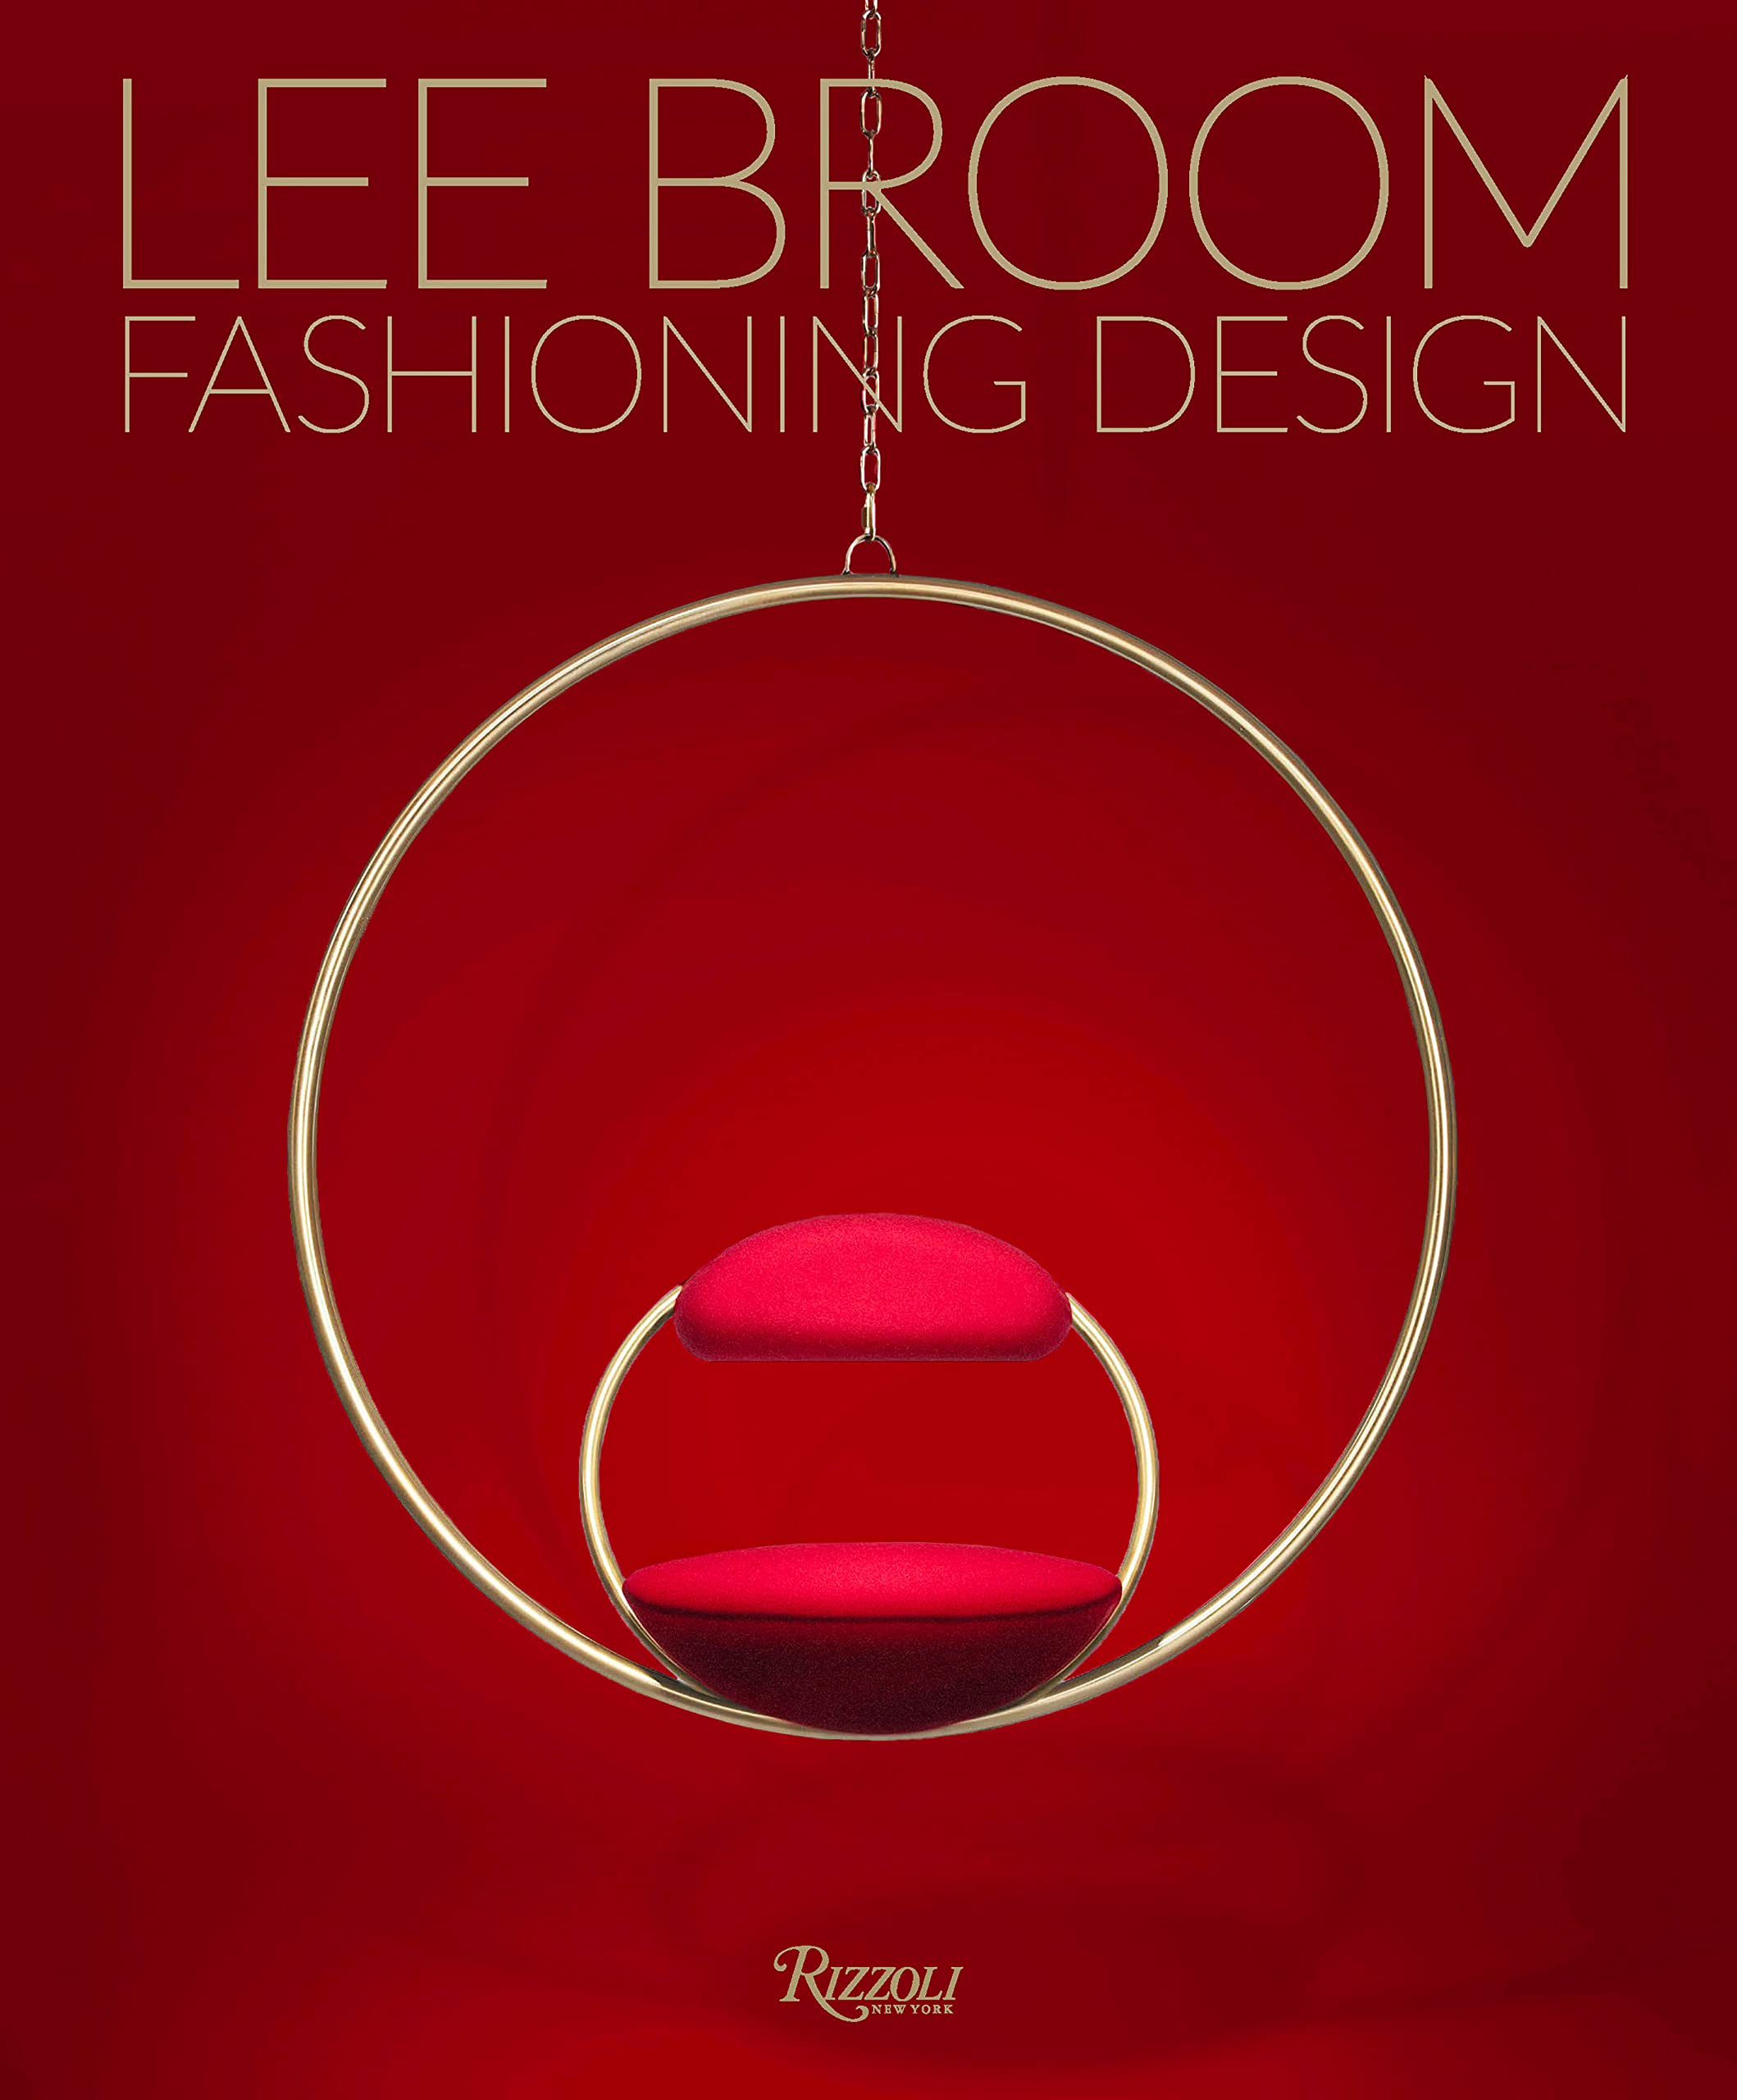 Lee Broom Fashioning Design